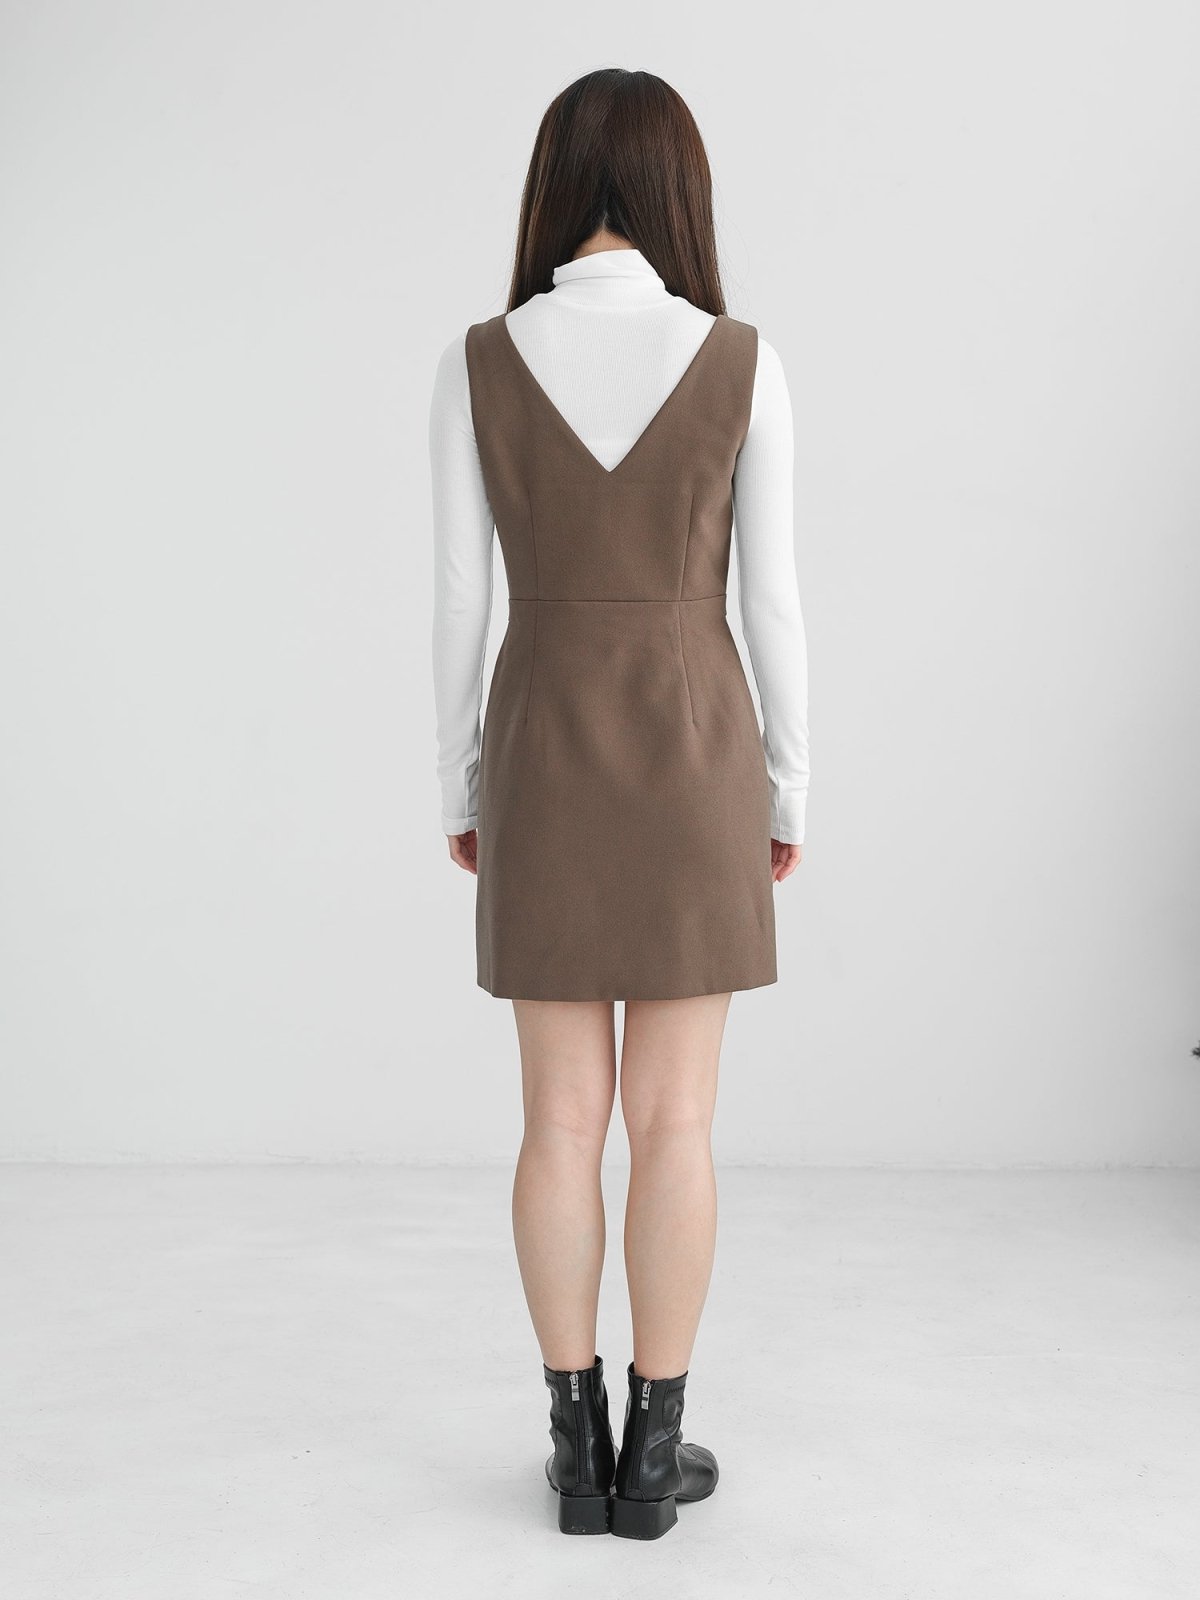 Aspen V-neck Sleeveless Dress - DAG-DD1302-23BrownieS - Brownie - S - D'zage Designs